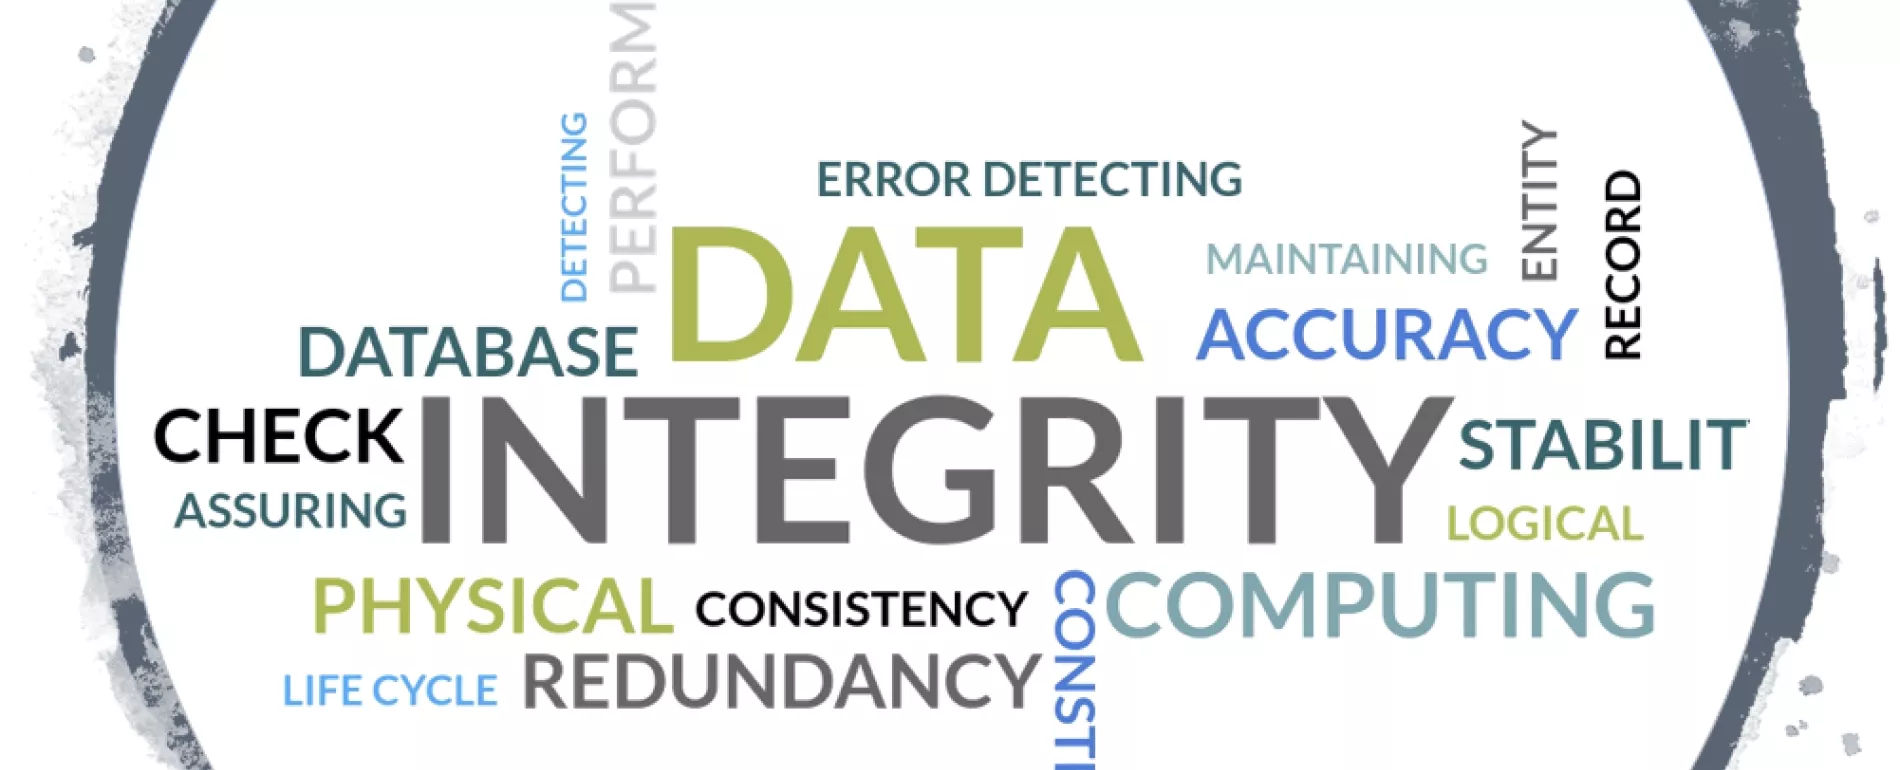 Data integrity